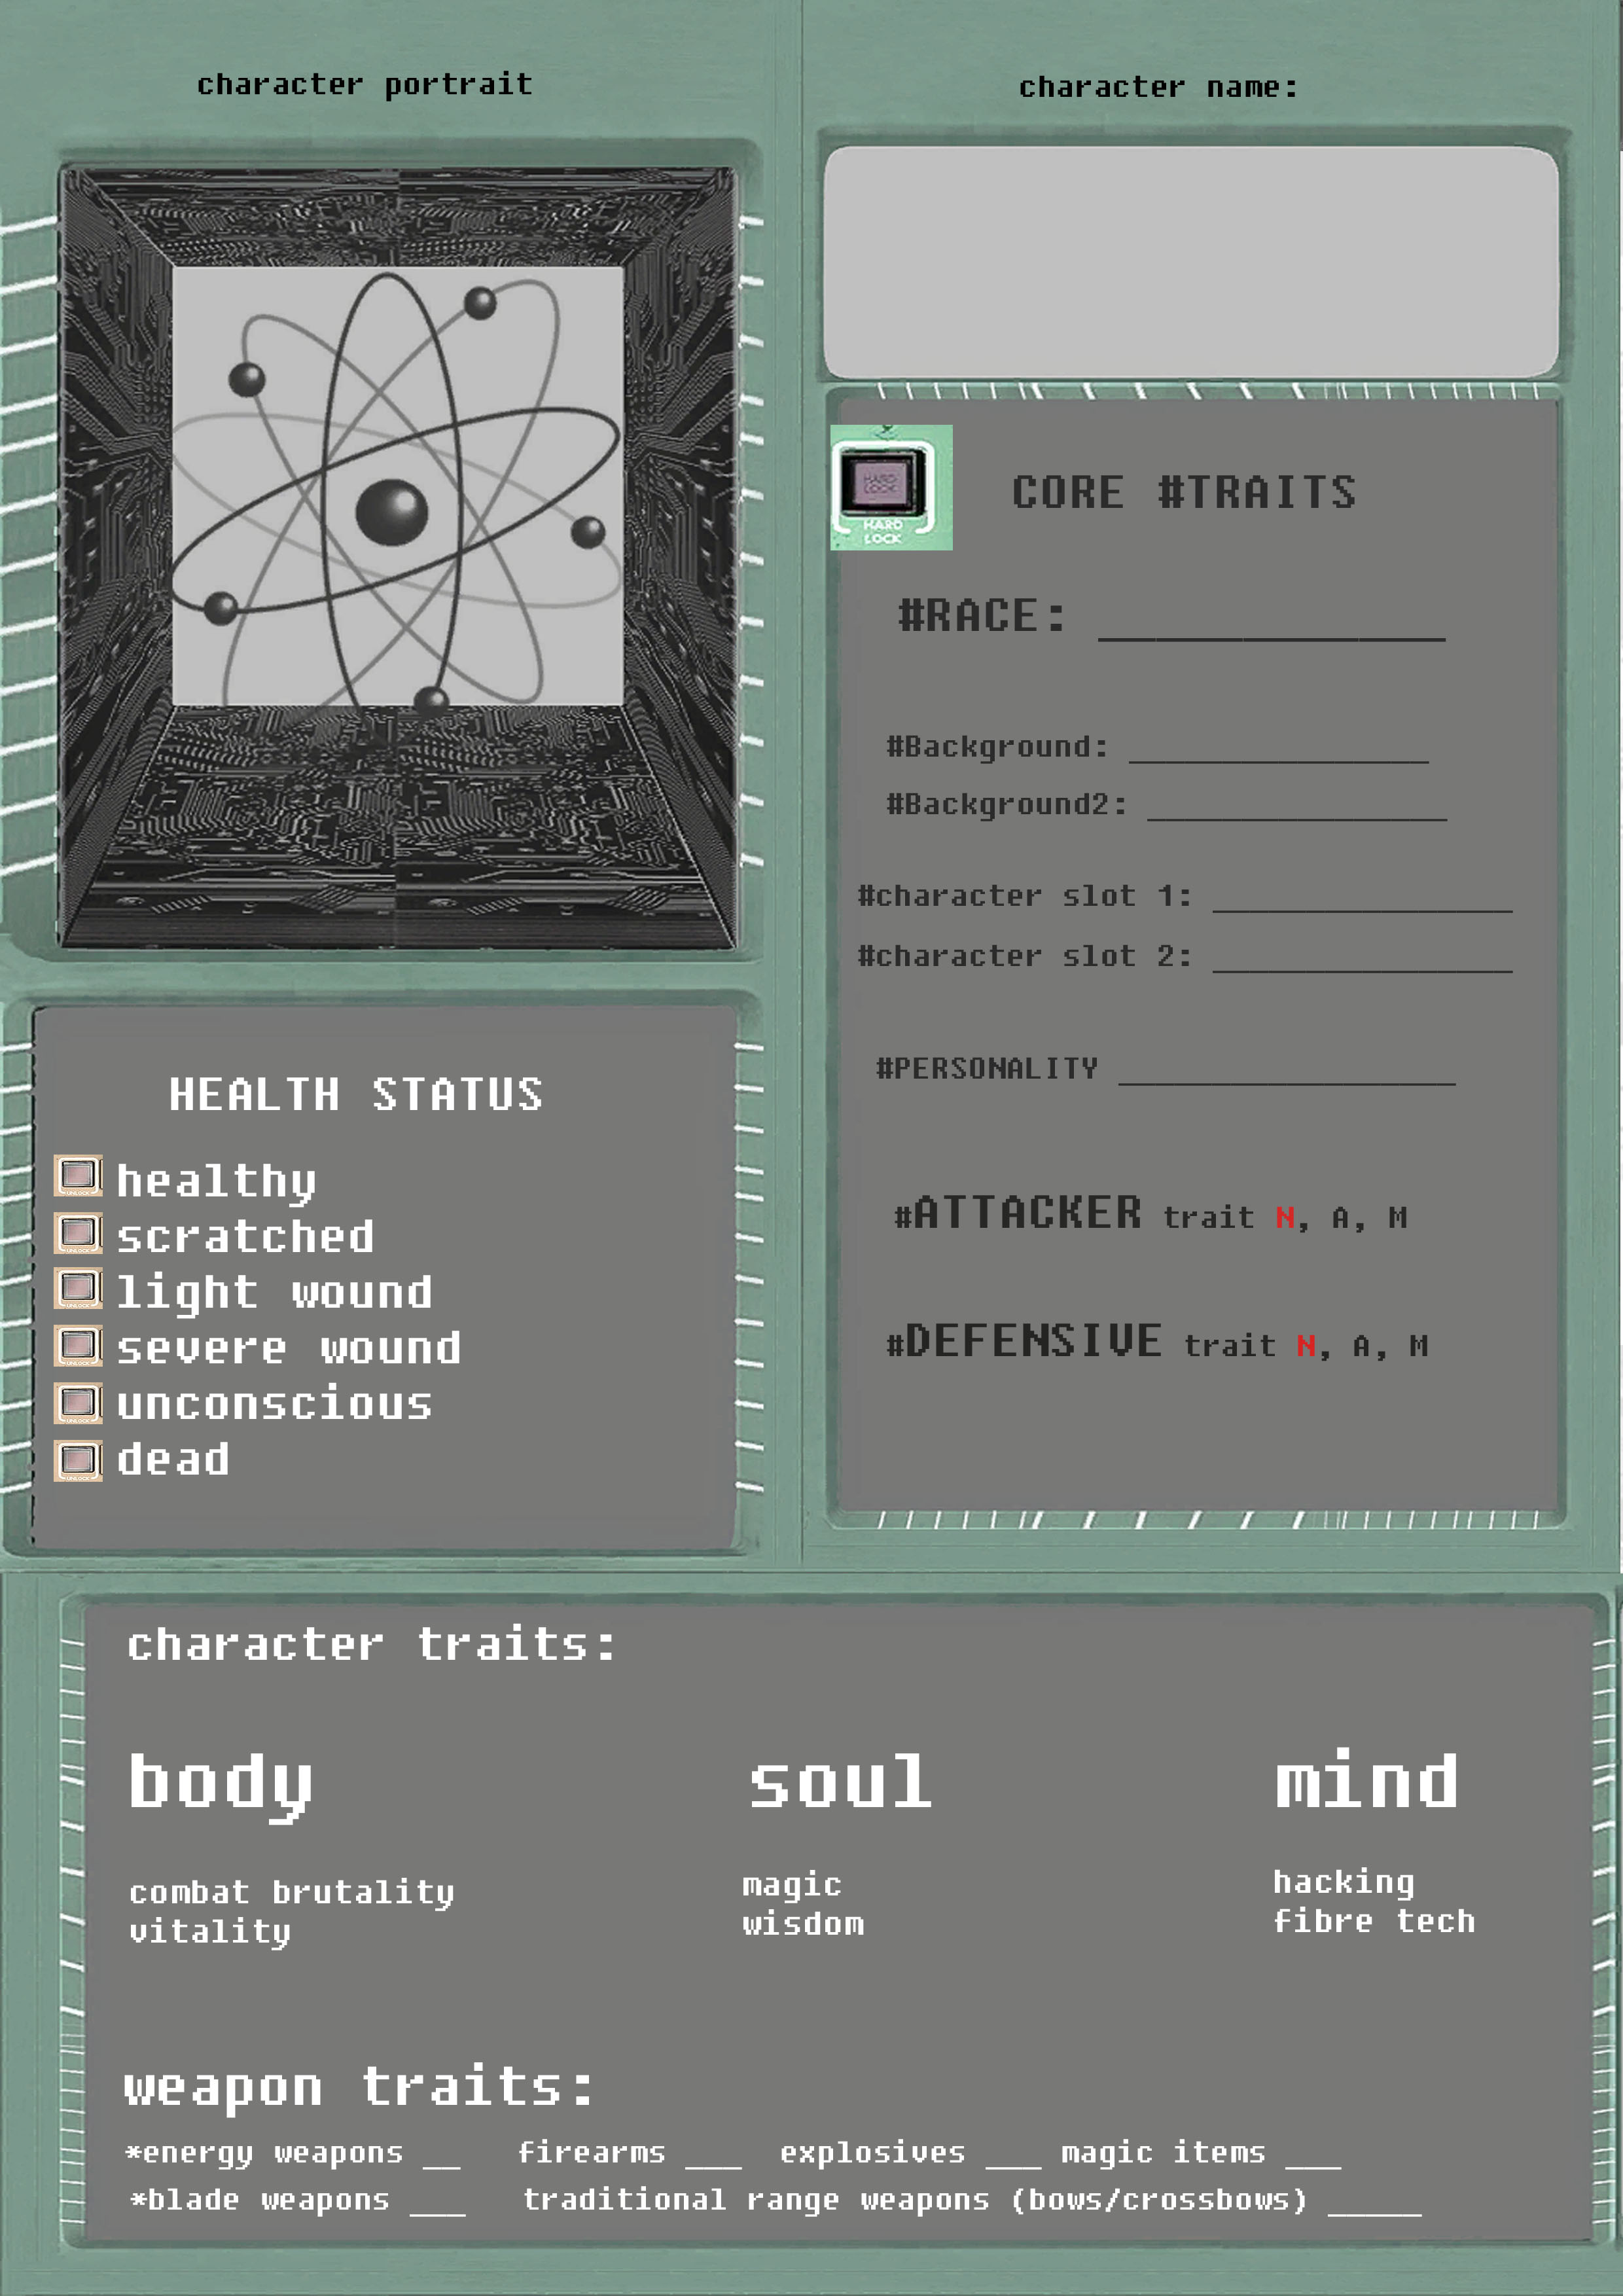 Character Biogram prototype 1